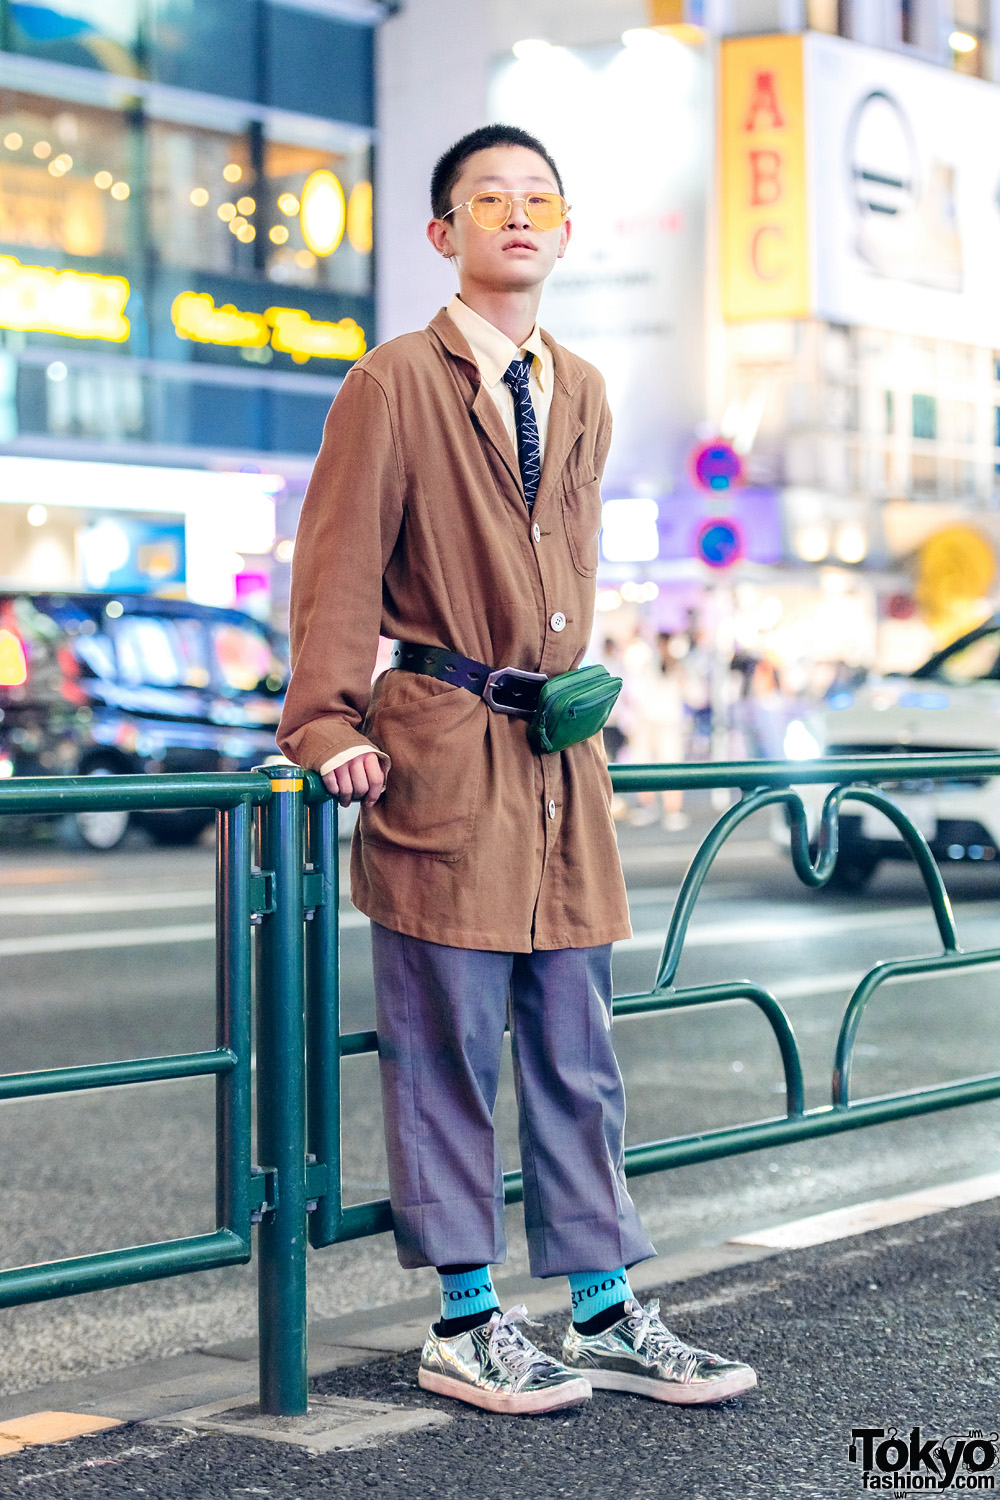 Japanese Teen in Retro Men's Fashion w/ QUN Tokyo Metallic Sneakers & Kenzo Belt Bag